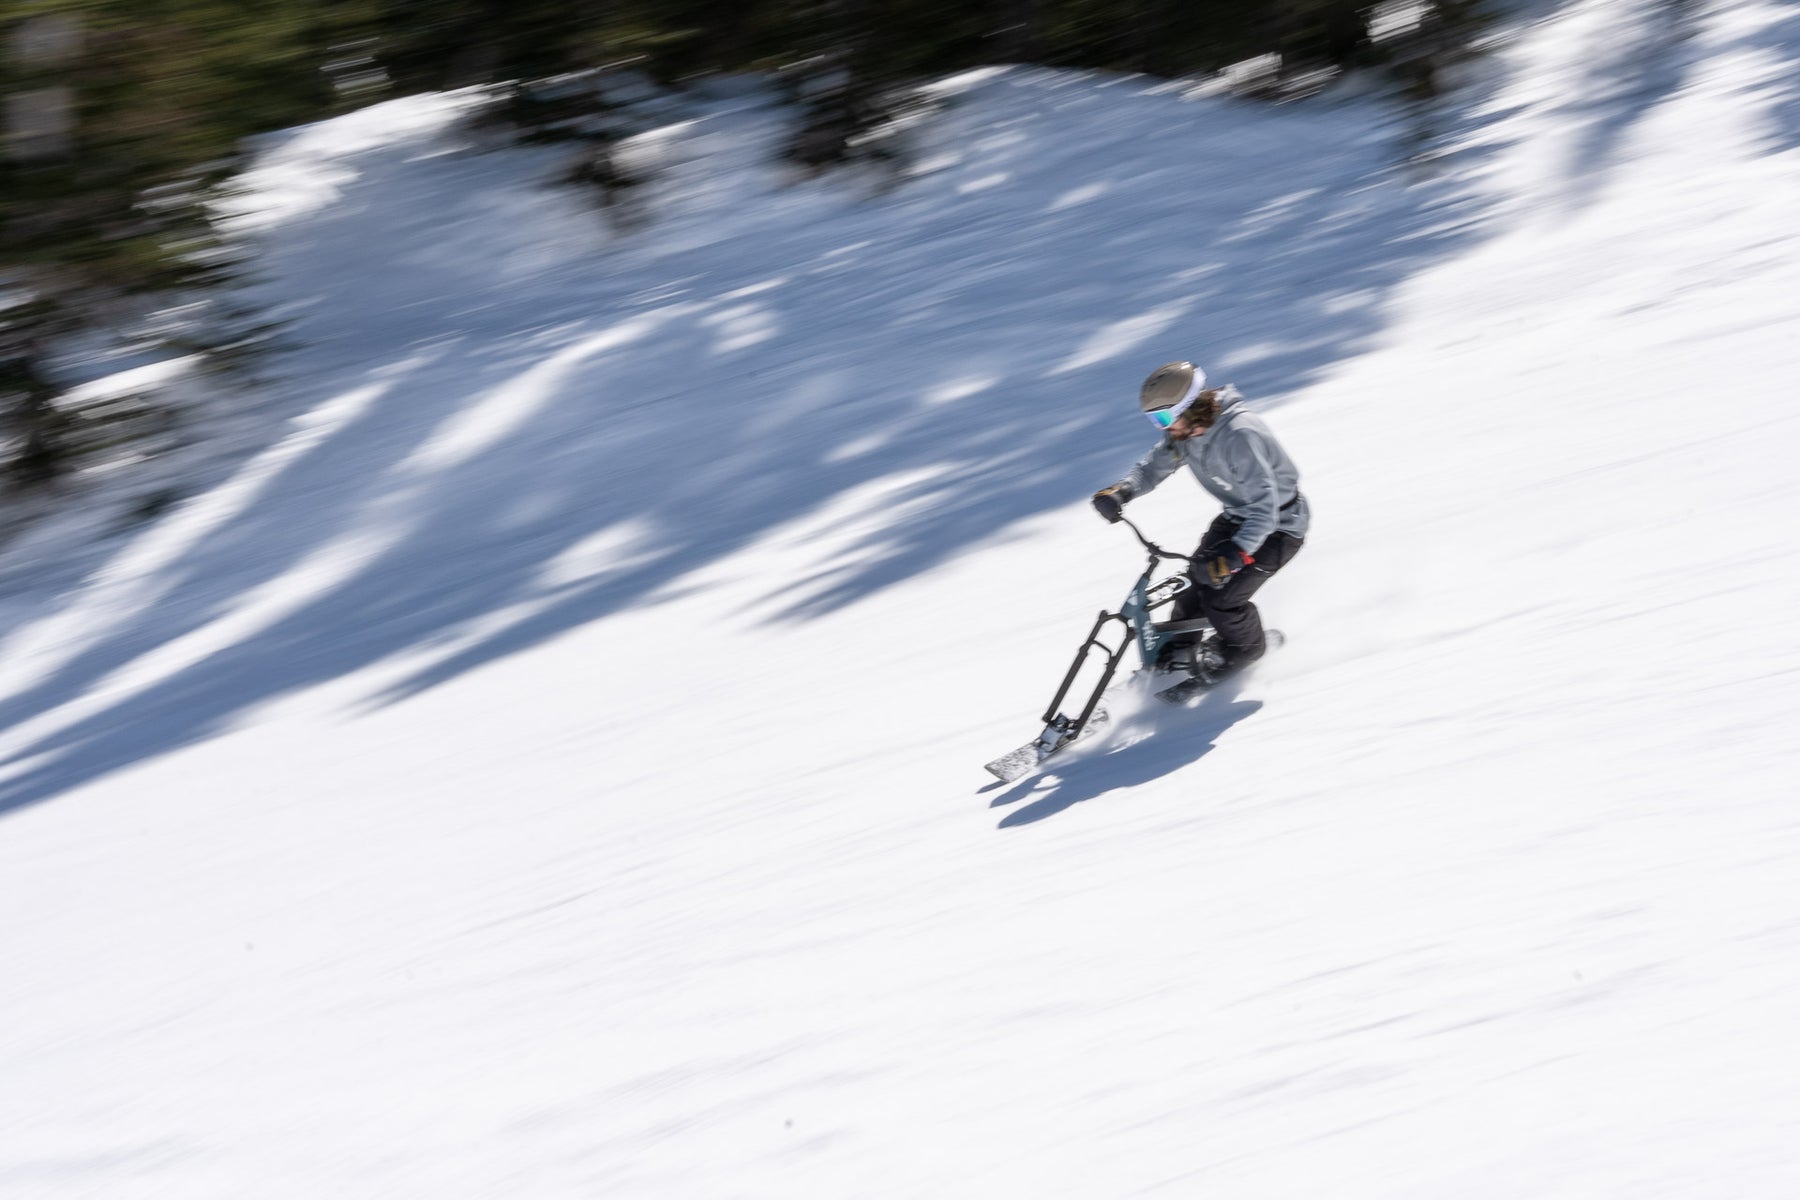 How To Ride A SNO-GO Ski Bike 